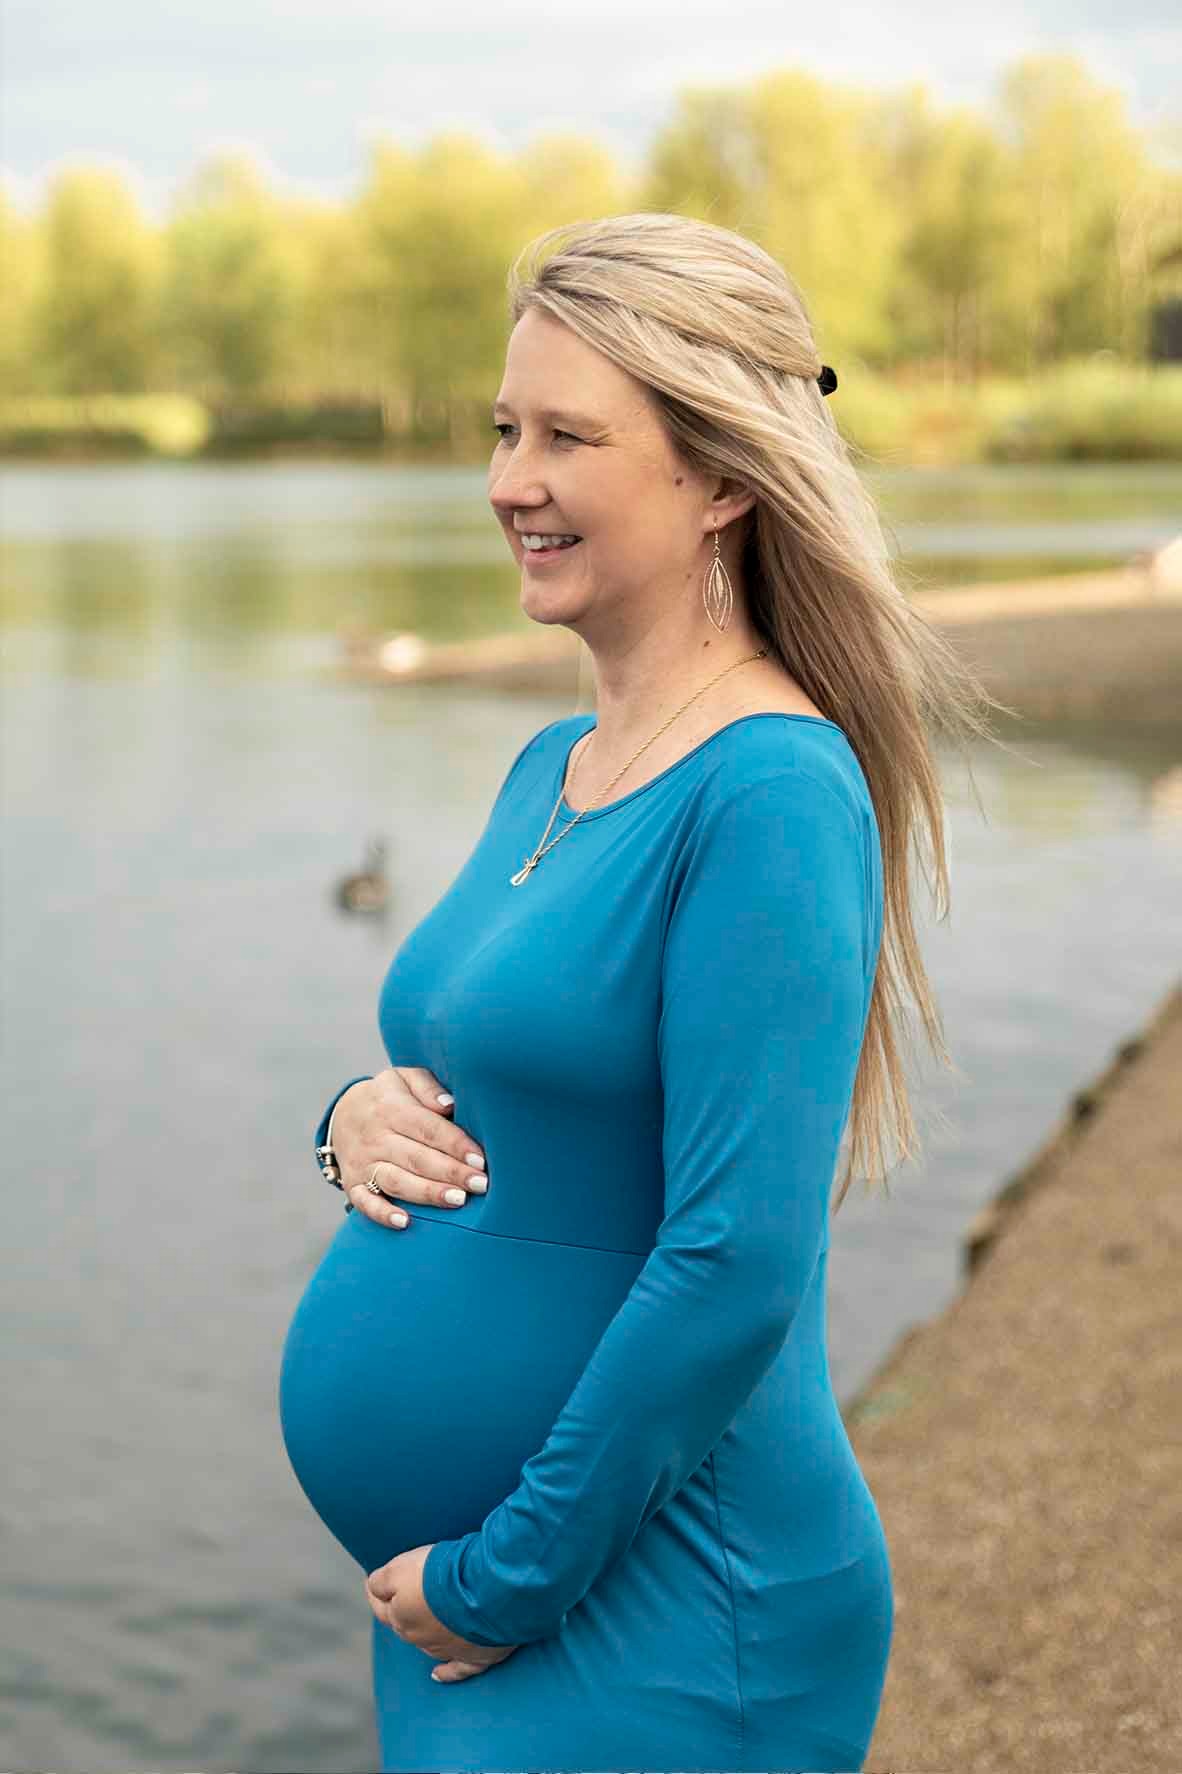 Mobile photoshoot for maternity session in Milton Keynes